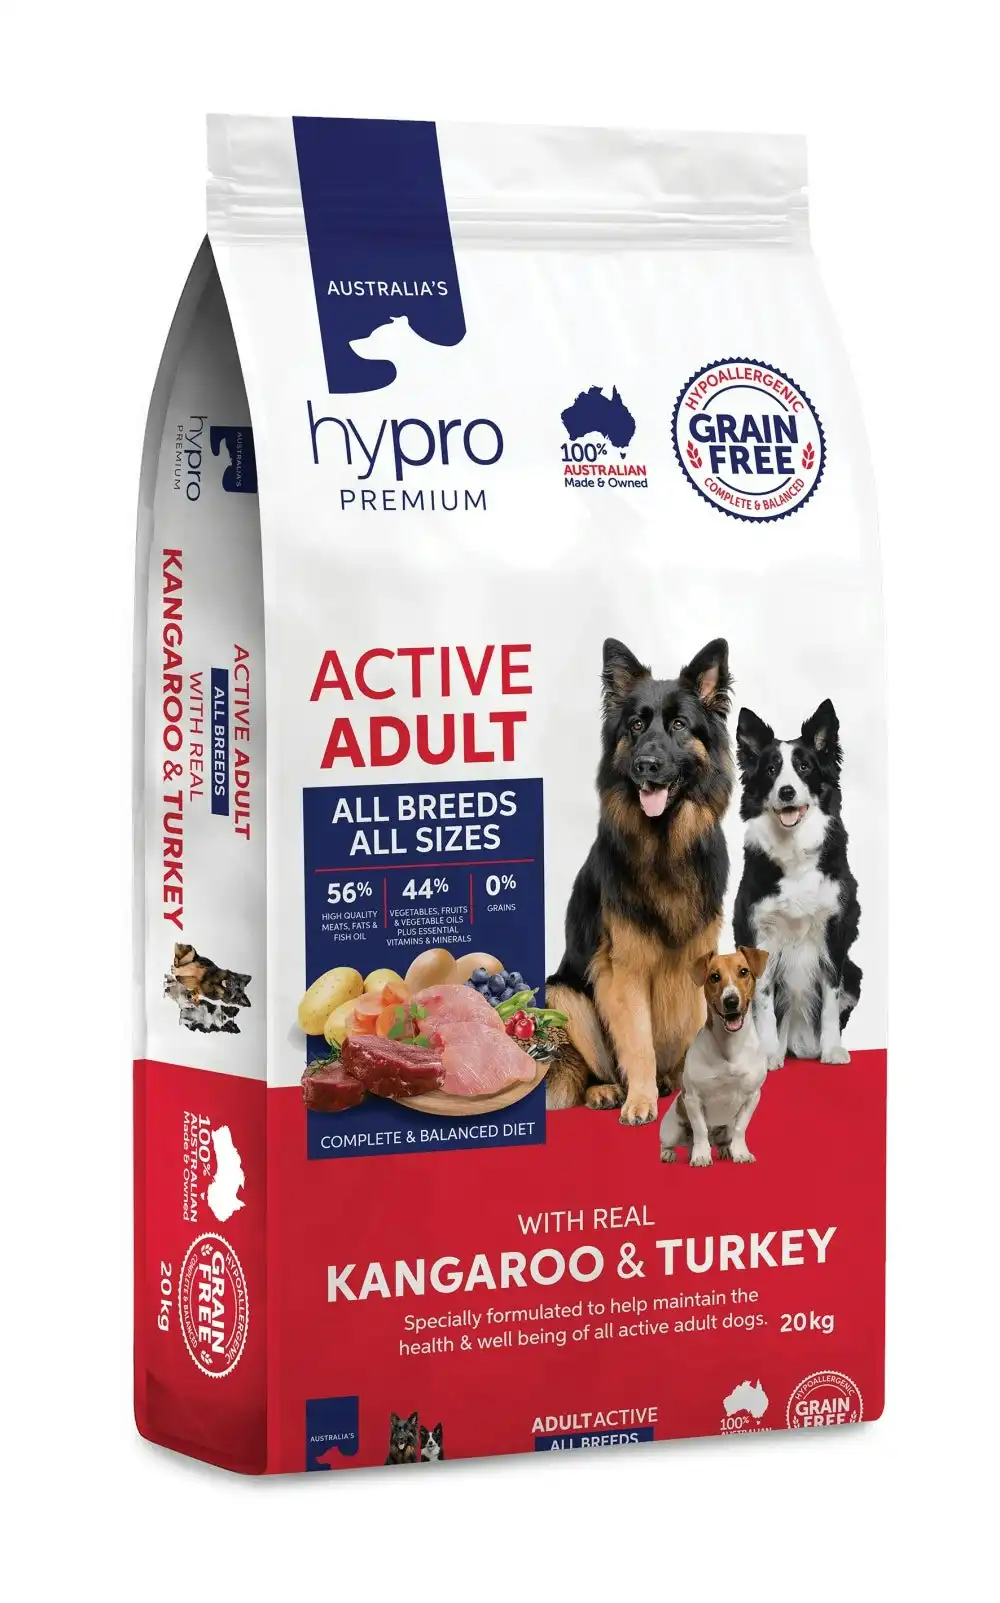 Hypro Premium Working Dog Grain Free Kangaroo & Turkey Dry Food 20kg